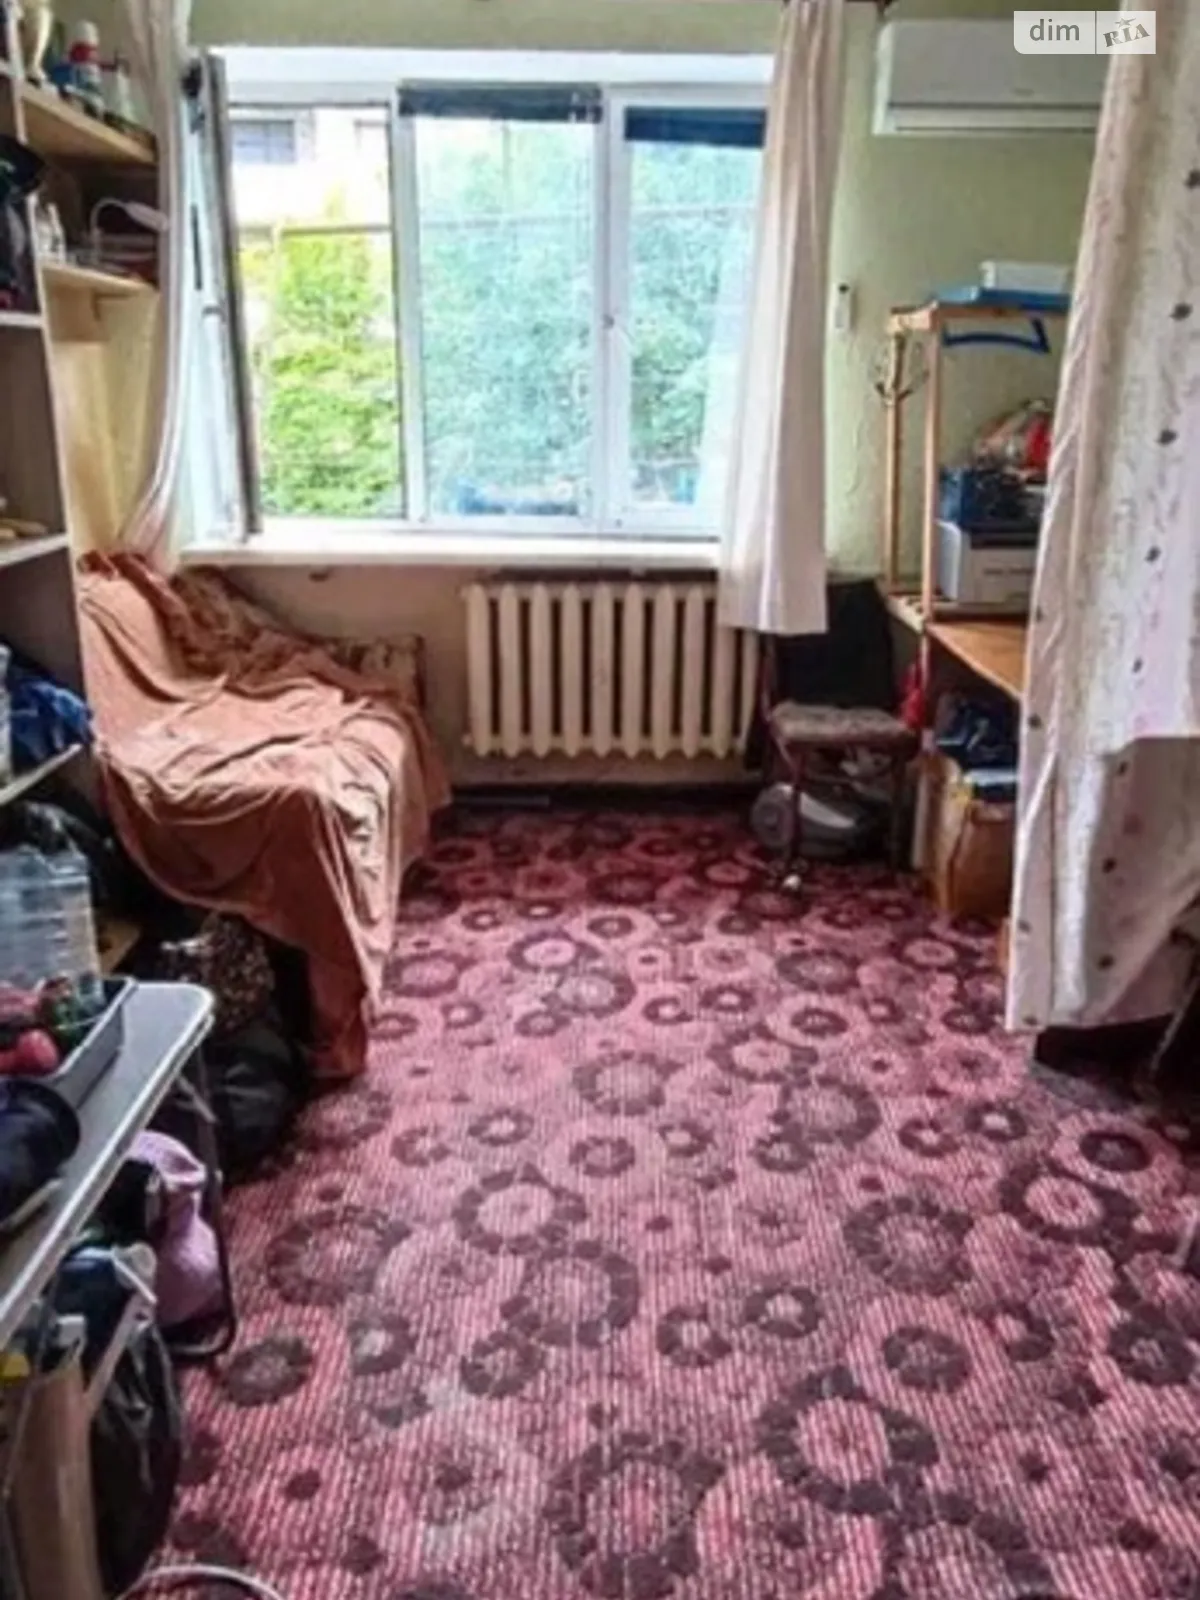 Продается комната 12.4 кв. м в Одессе, цена: 10000 $ - фото 1